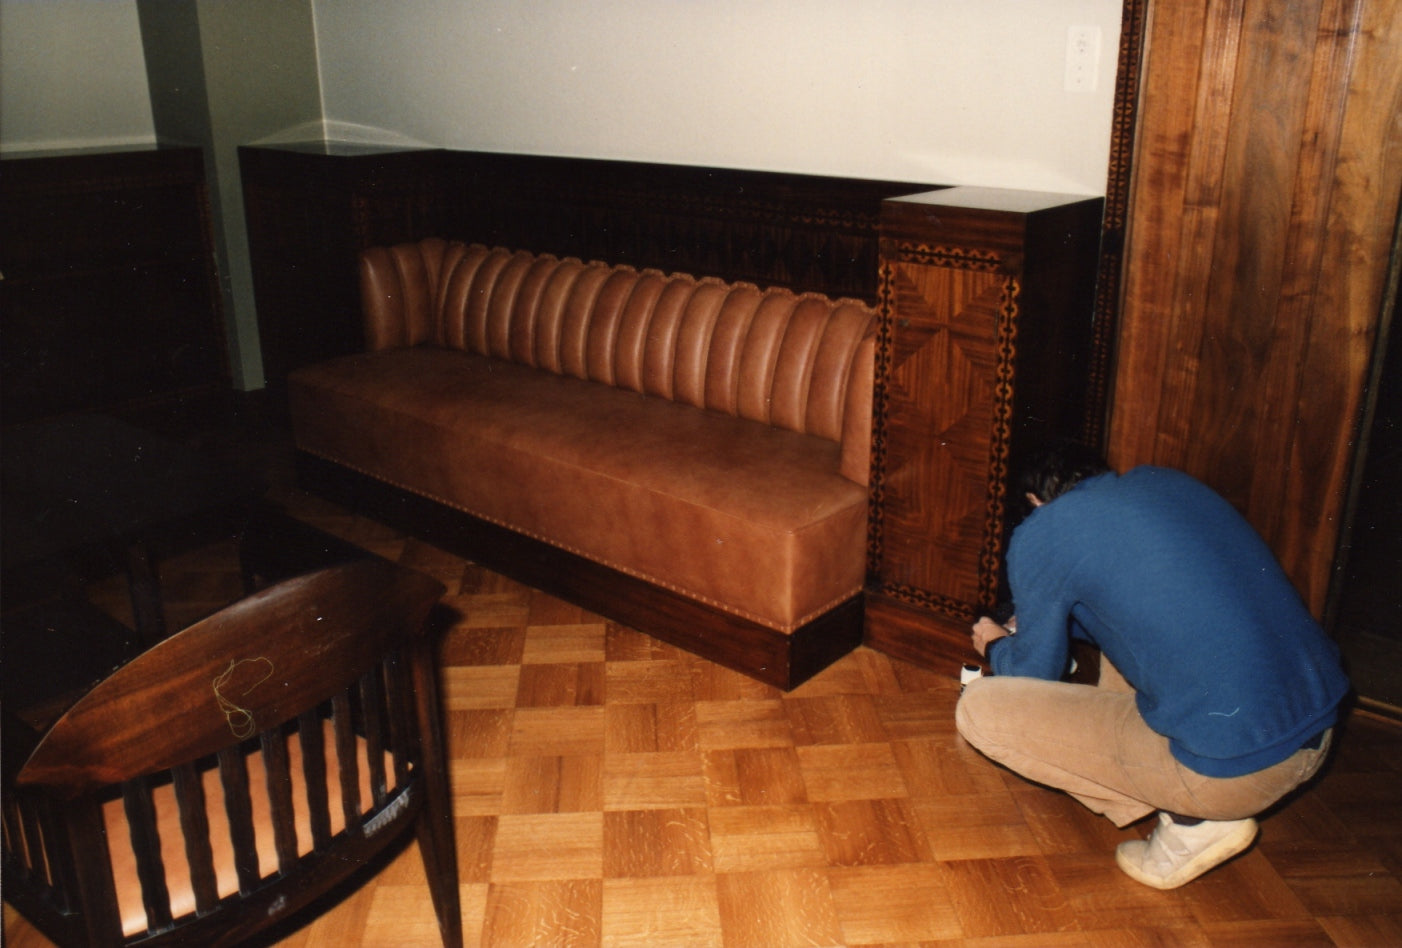 Eliel Saarinen's Marble Palace sofa remaking